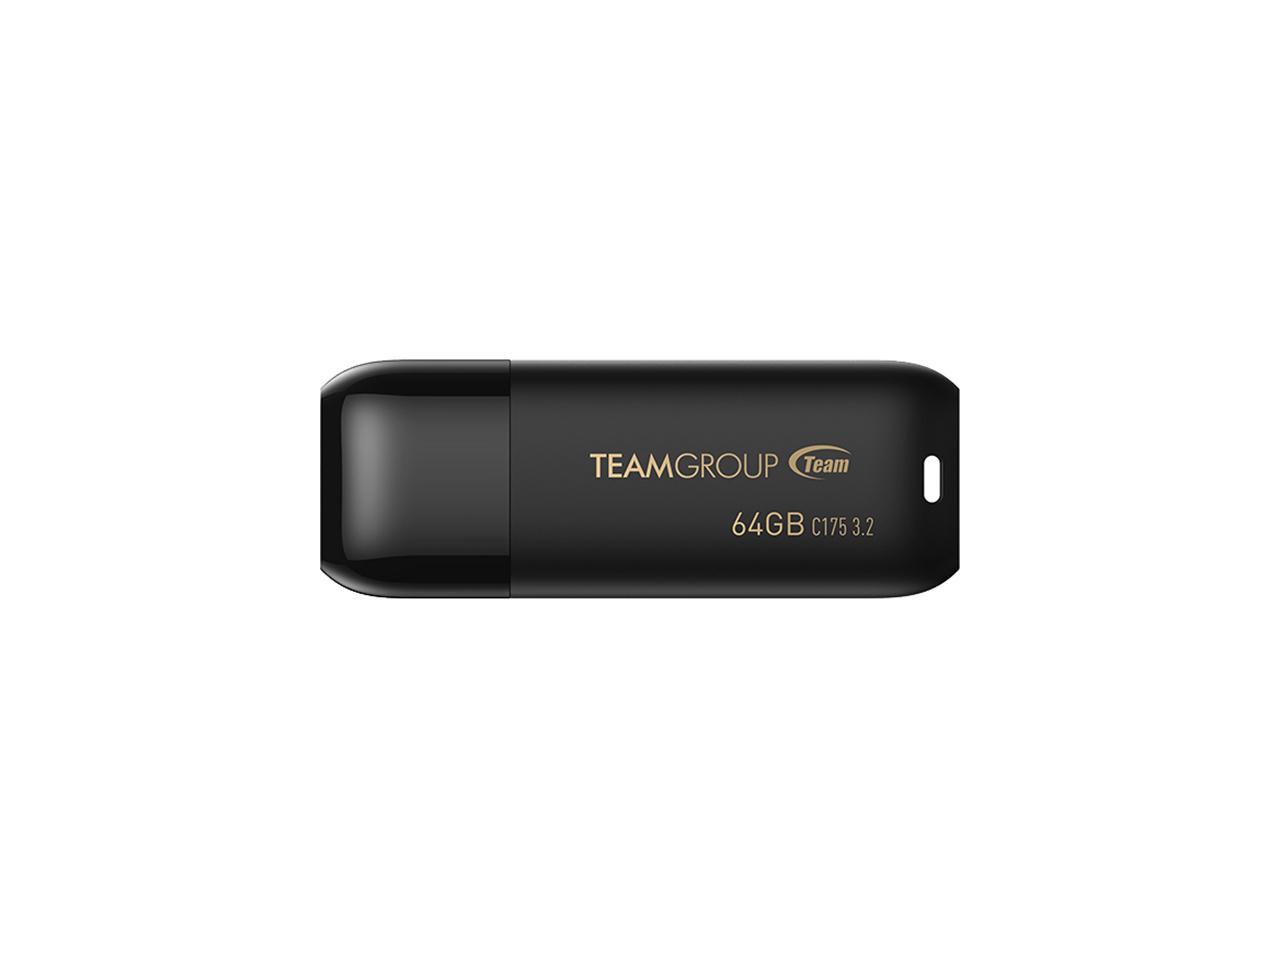 USB 3.2 thumbdrives cheap at newegg multiple sizes $4.79